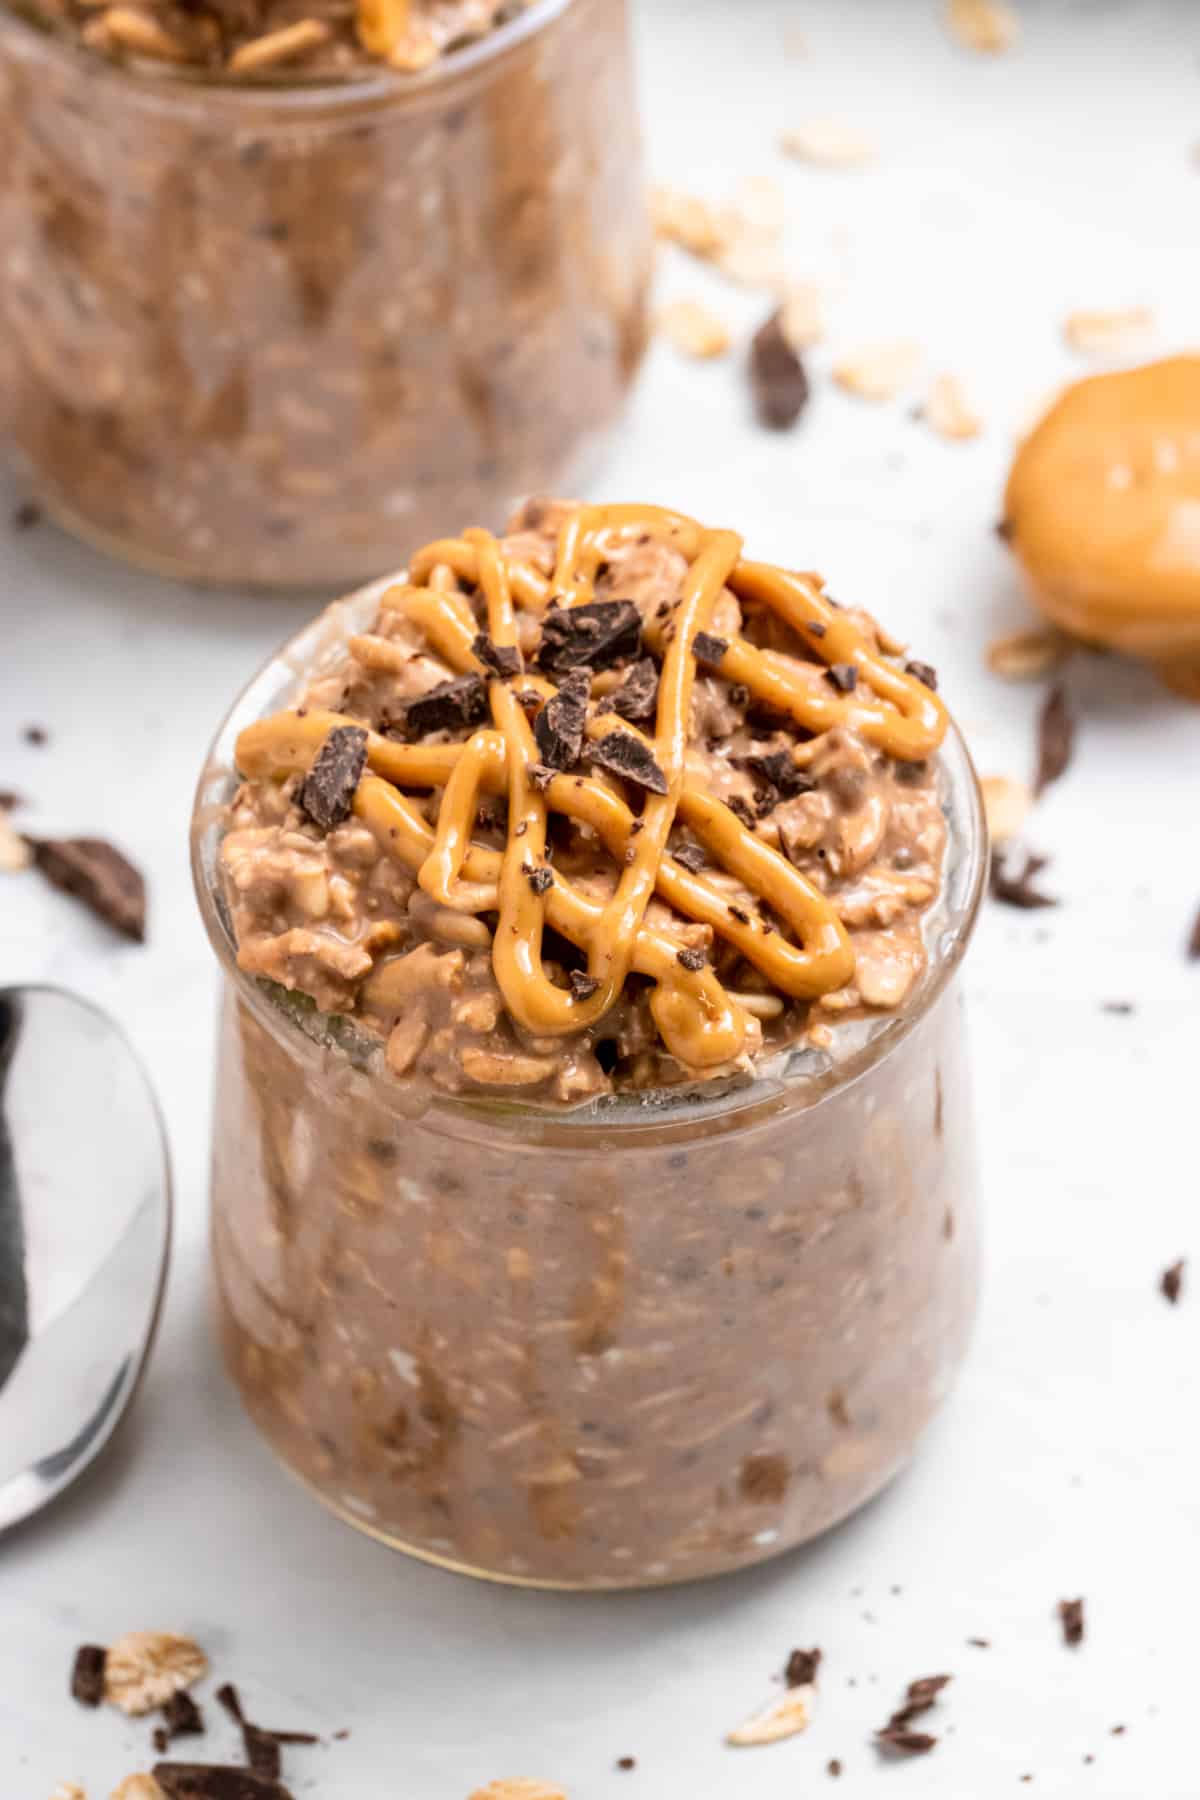 Peanut butter chocolate overnight oats in jar with peanut butter drizzle and chopped chocolate.